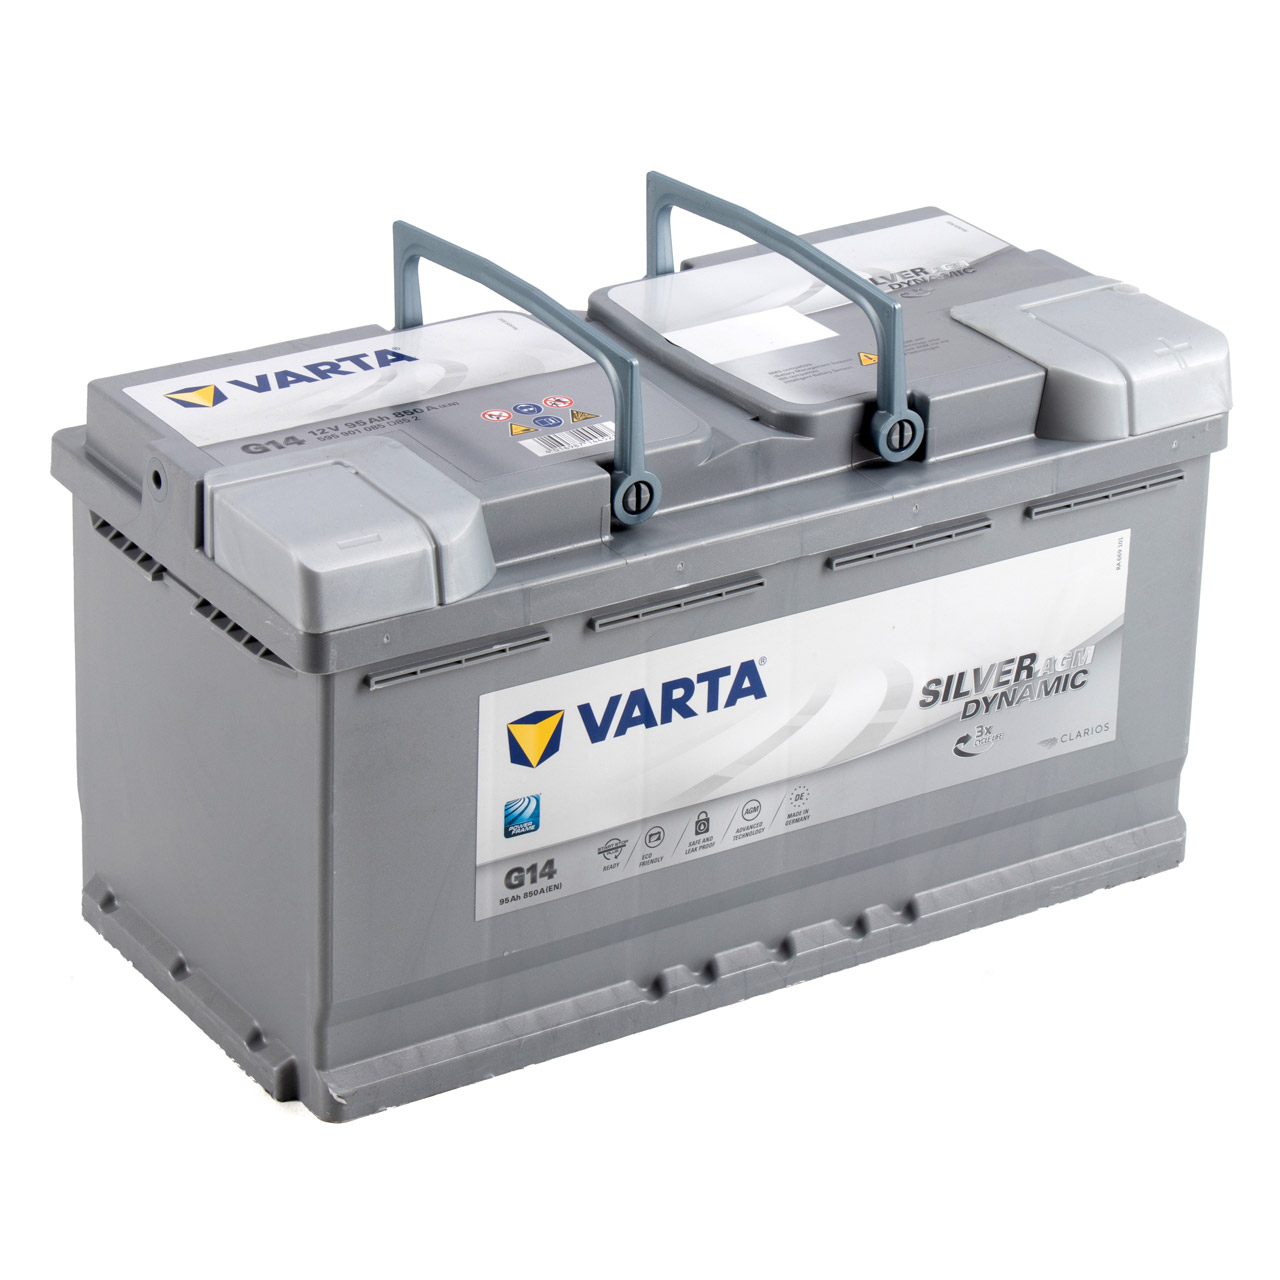 Batterie VARTA AGM Deep Cycle COMPACT 95Ah